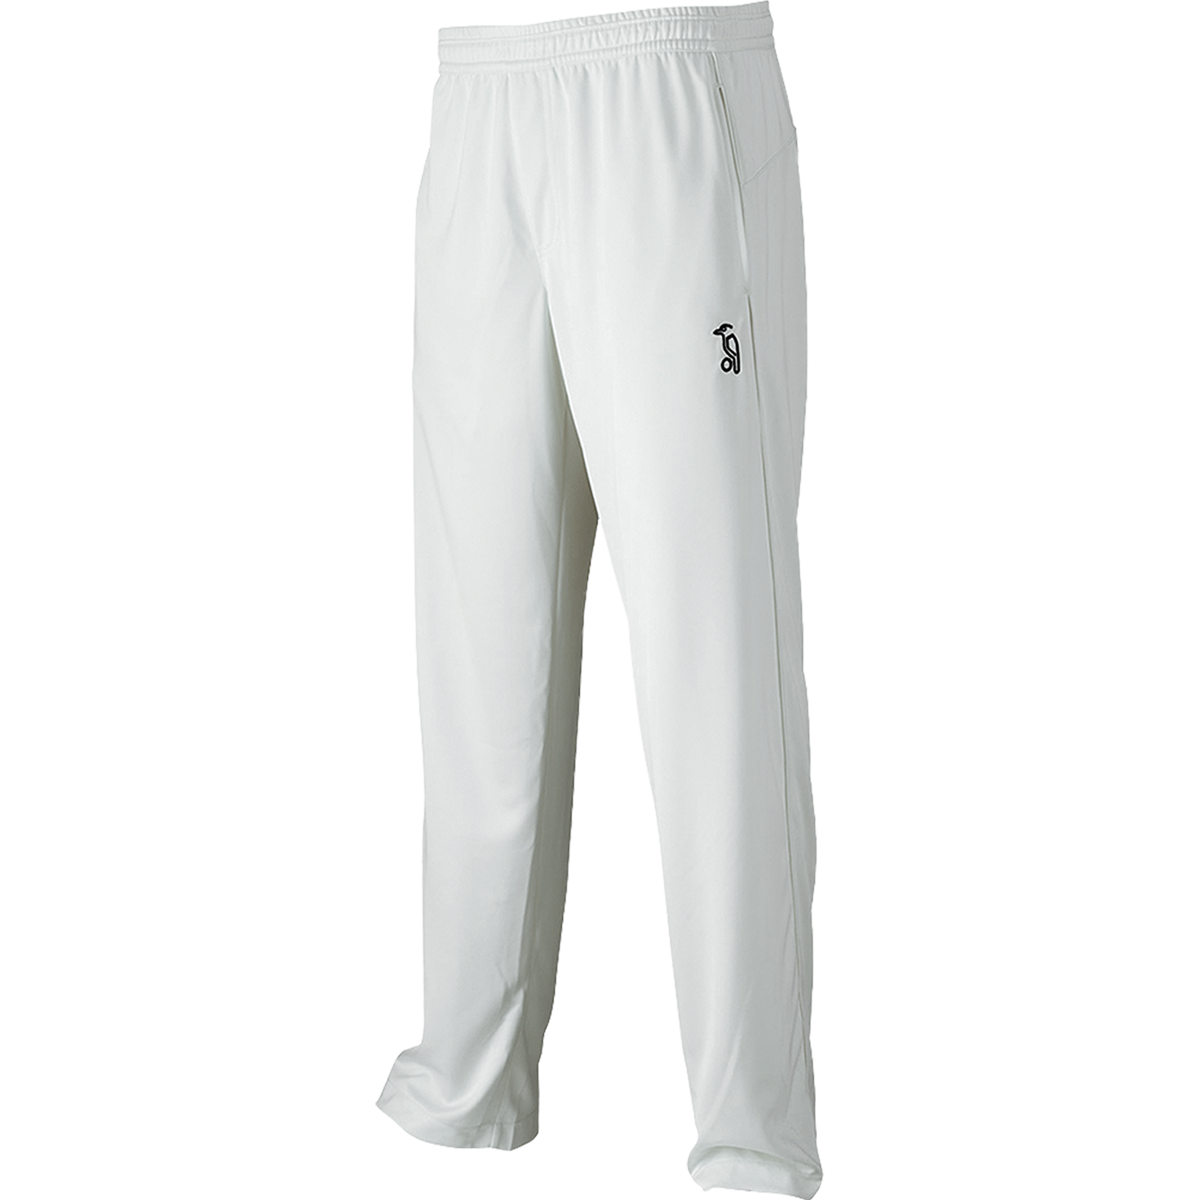 SS Super Half Sleeve Cricket Dress Set Combo (Set of T-Shirt and Trousers)  - Big Value Shop